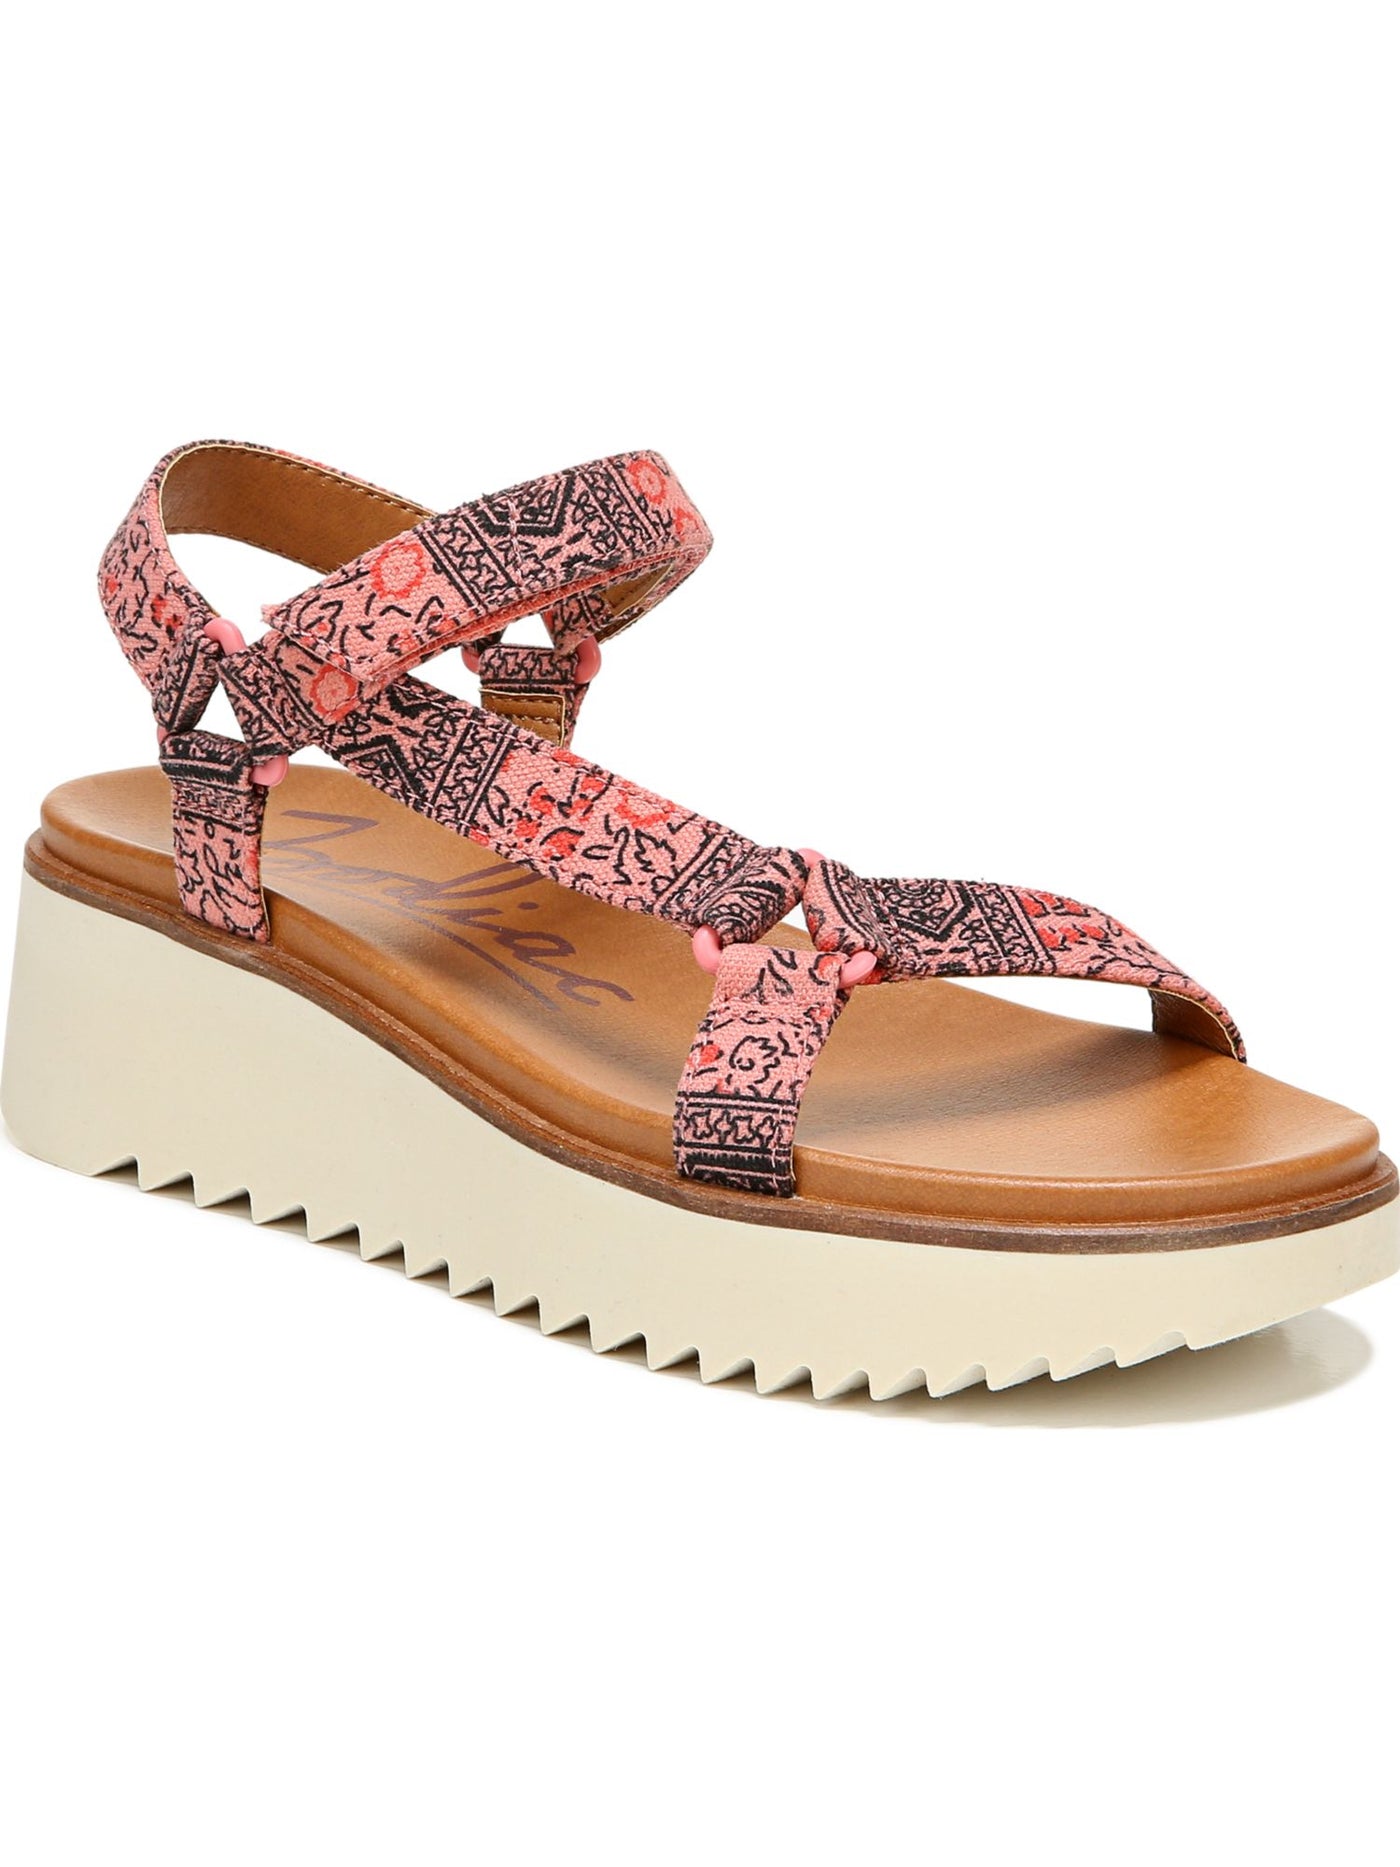 ZODIAC Womens Coral Cushioned Bria Round Toe Wedge Sandals Shoes 6.5